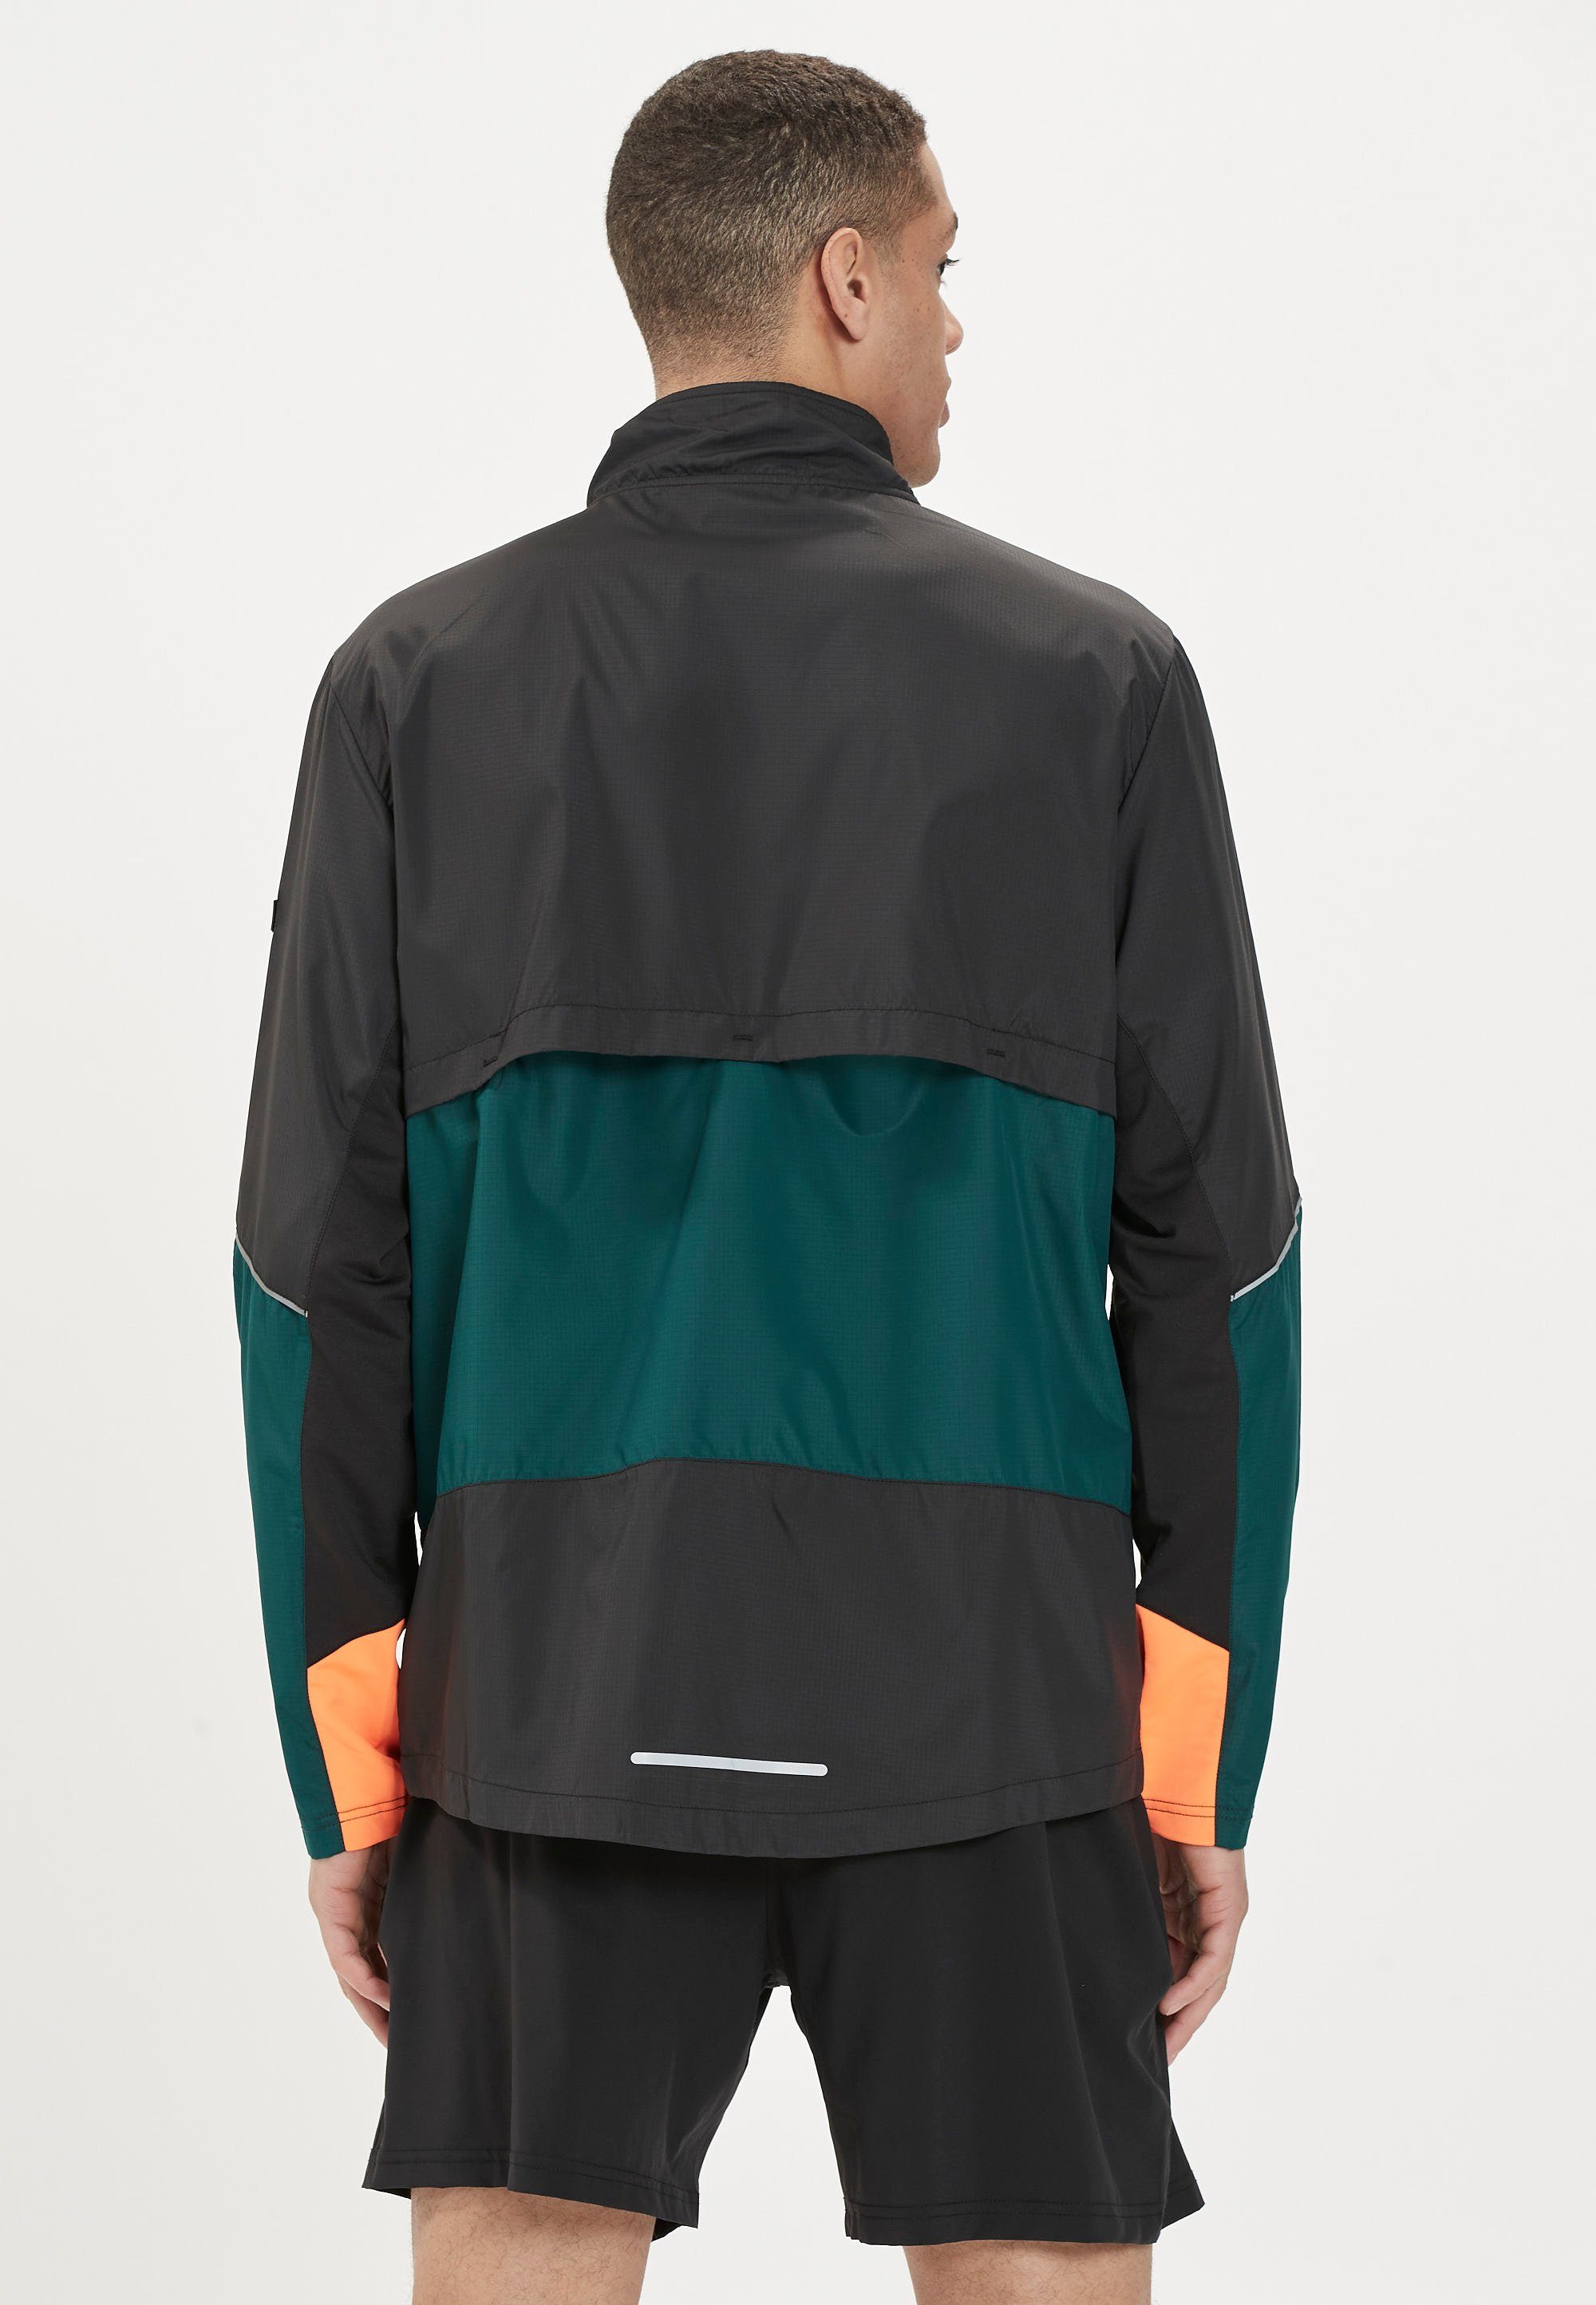 reflektierenden NOVANT Laufjacke Functional dunkelgrün Jacket mit ENDURANCE Details M